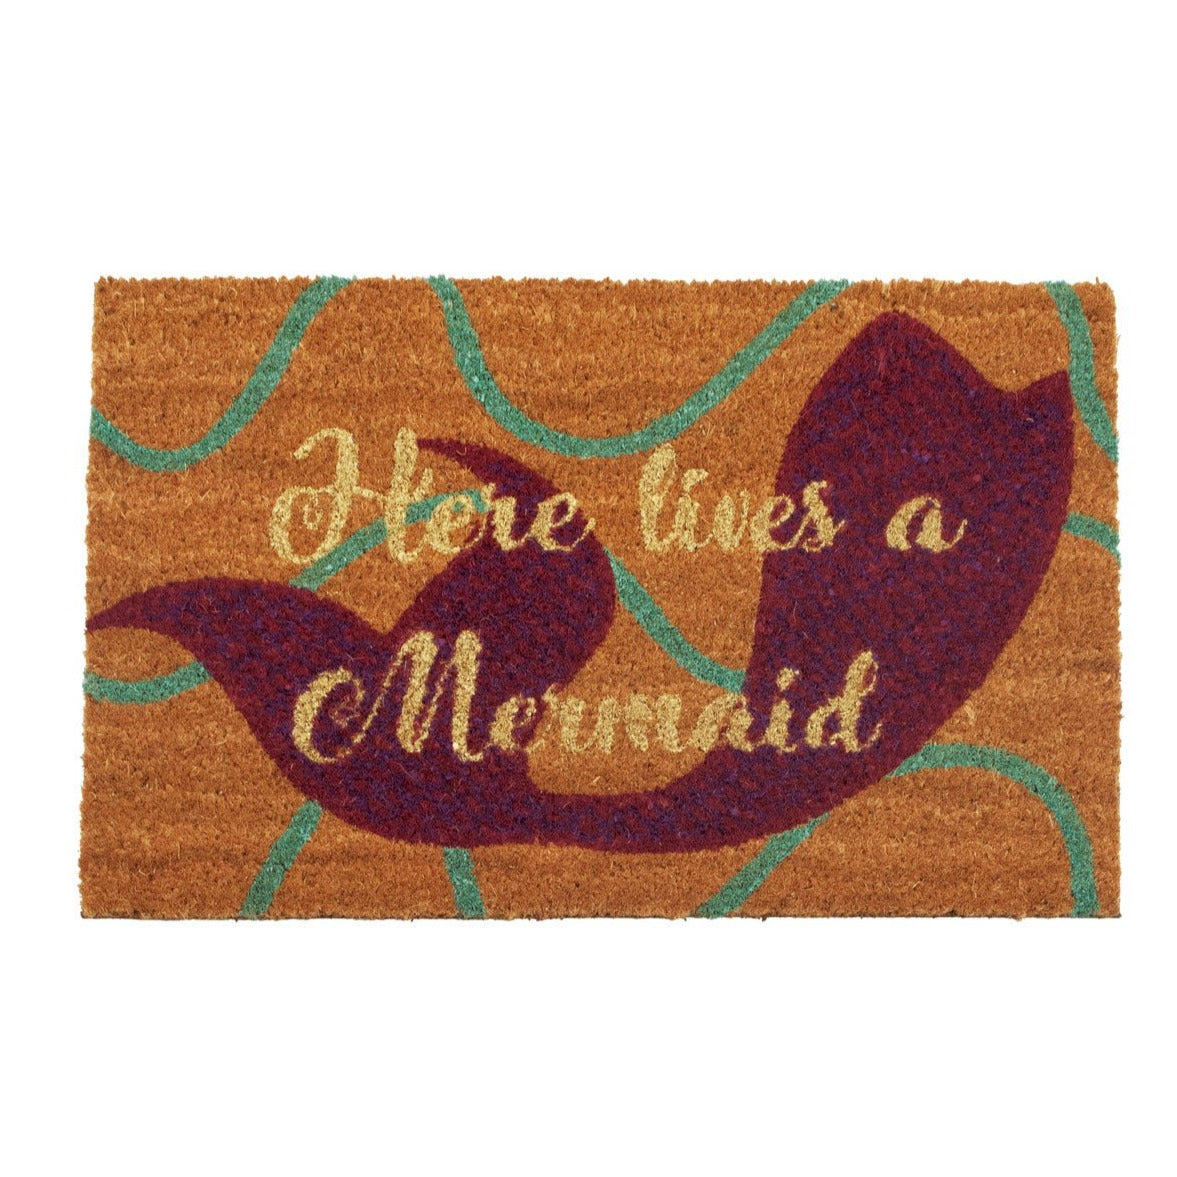 Mermaid Doormat made of Natural Fibres (60 x 40 cms) by Zaska